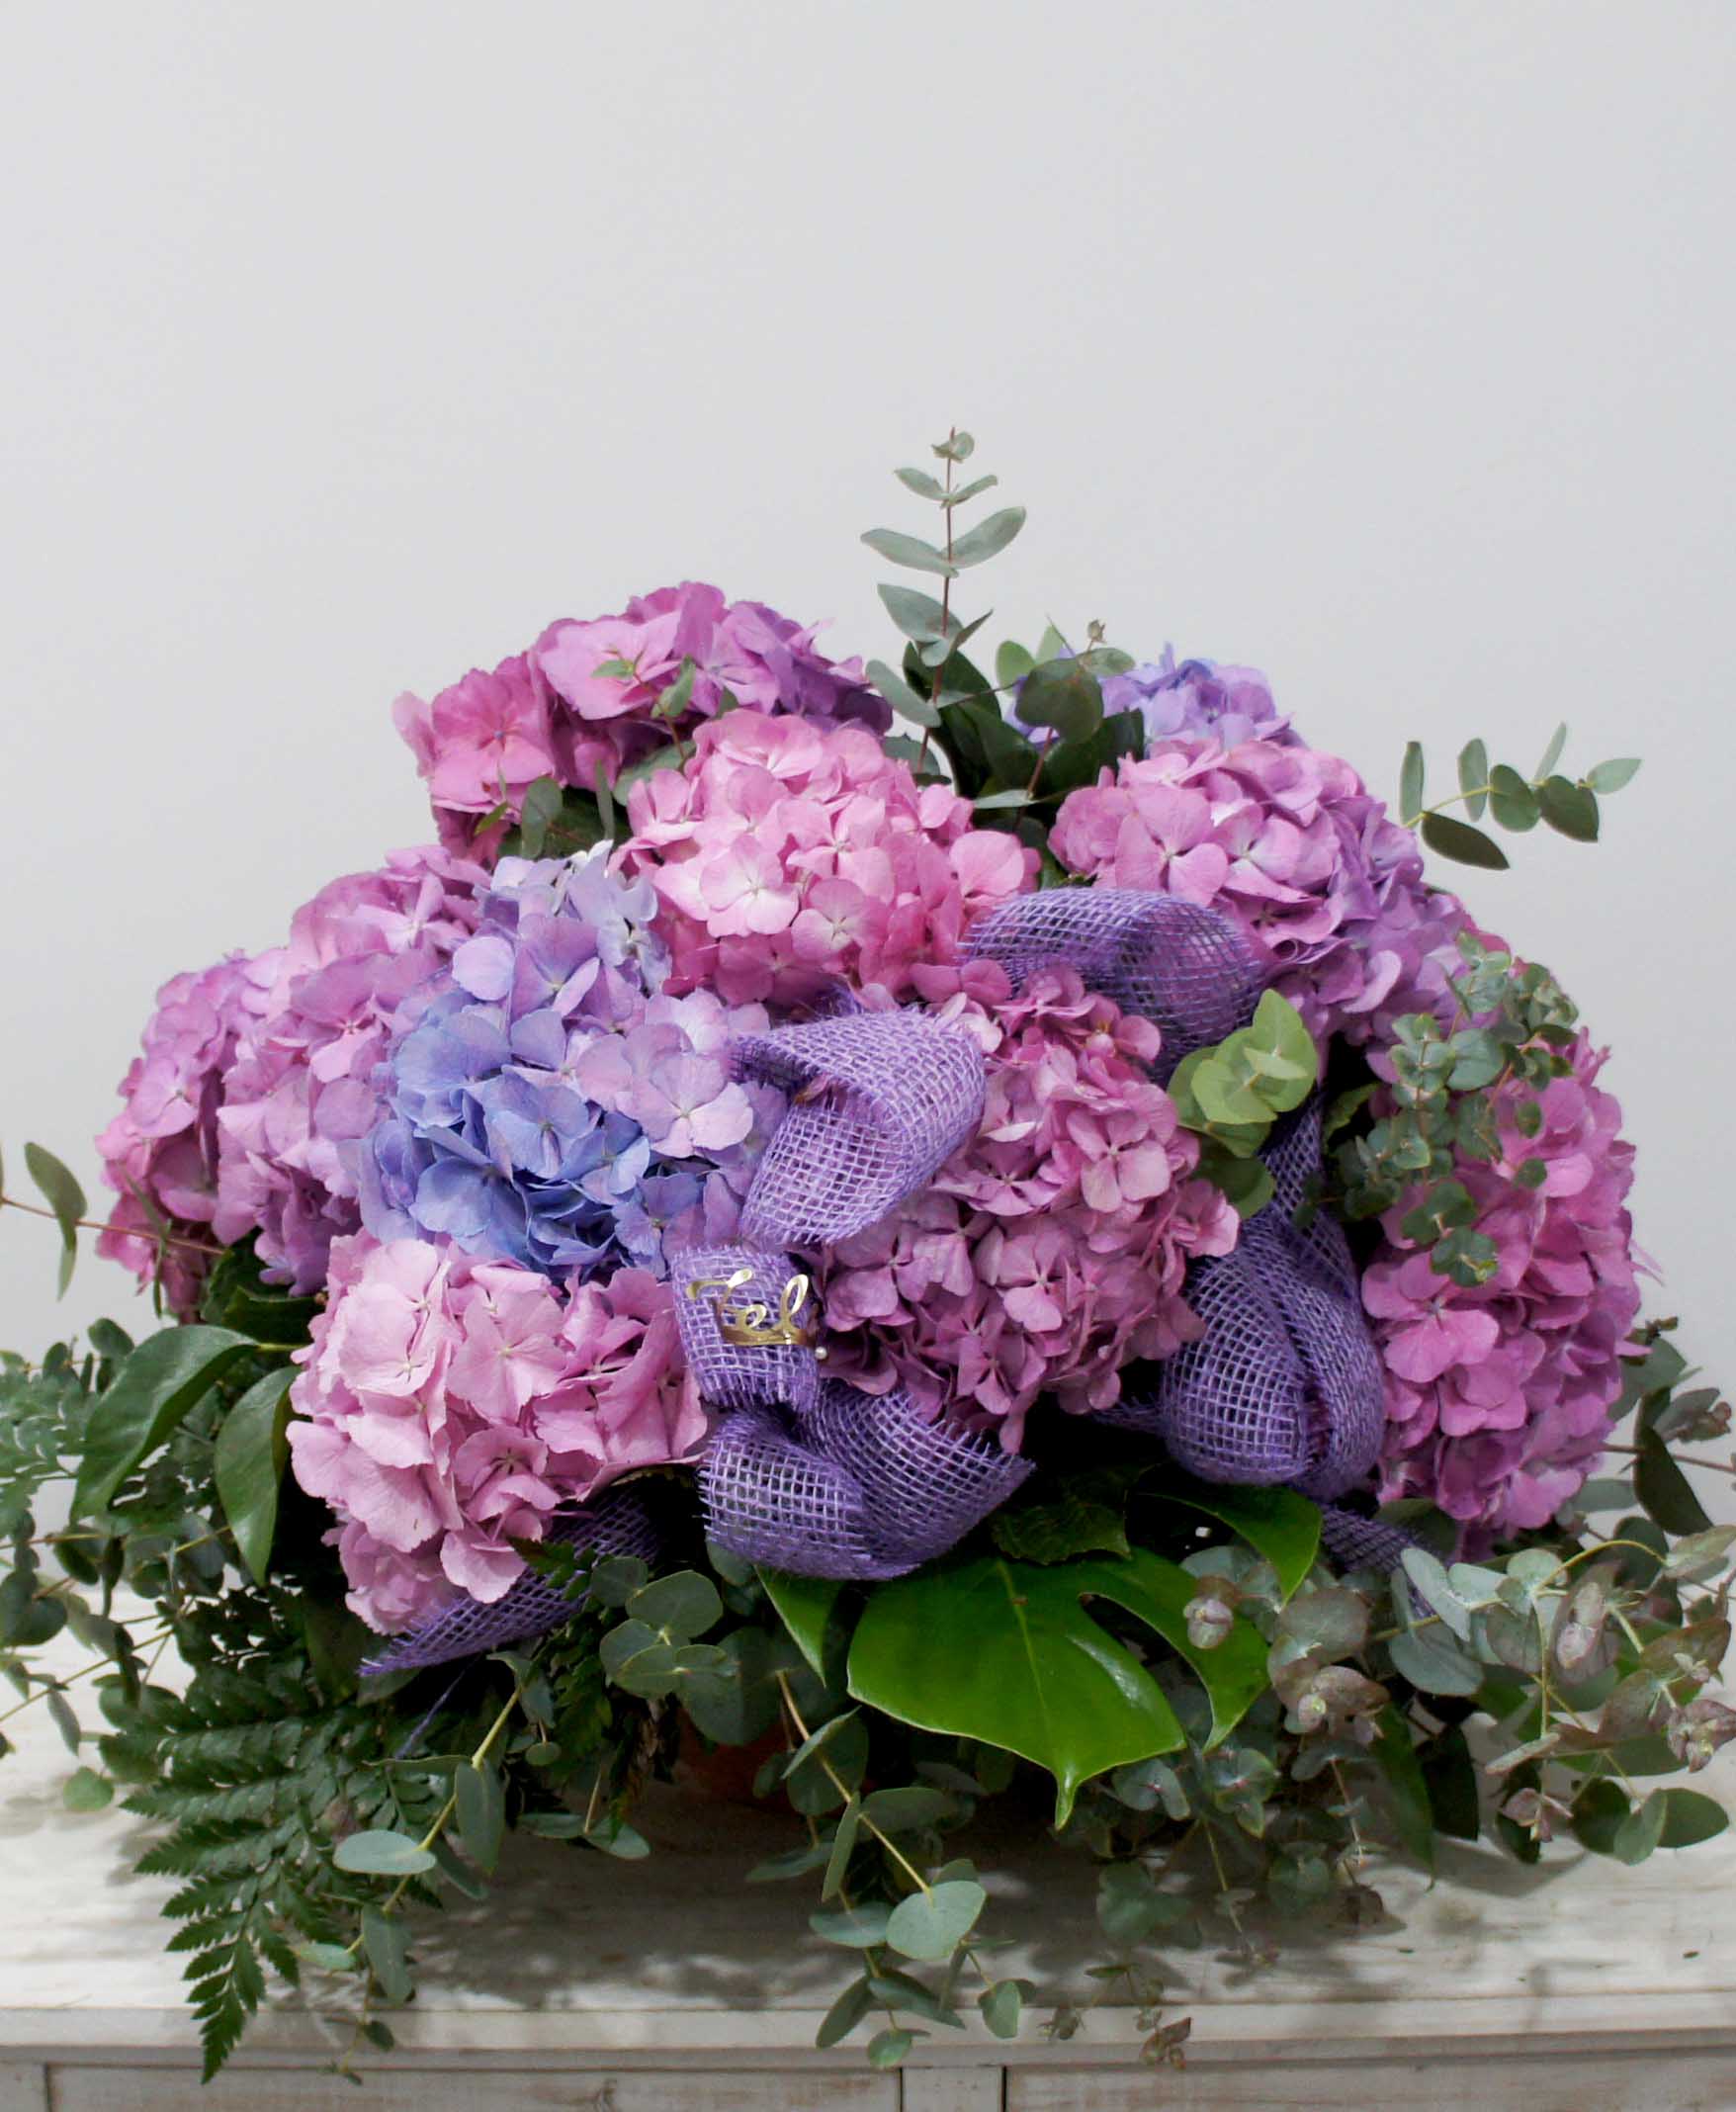 Centro con hortensias - flores a domicilio valencia - ramos de flores a  domicilio valencia - envío flores valencia